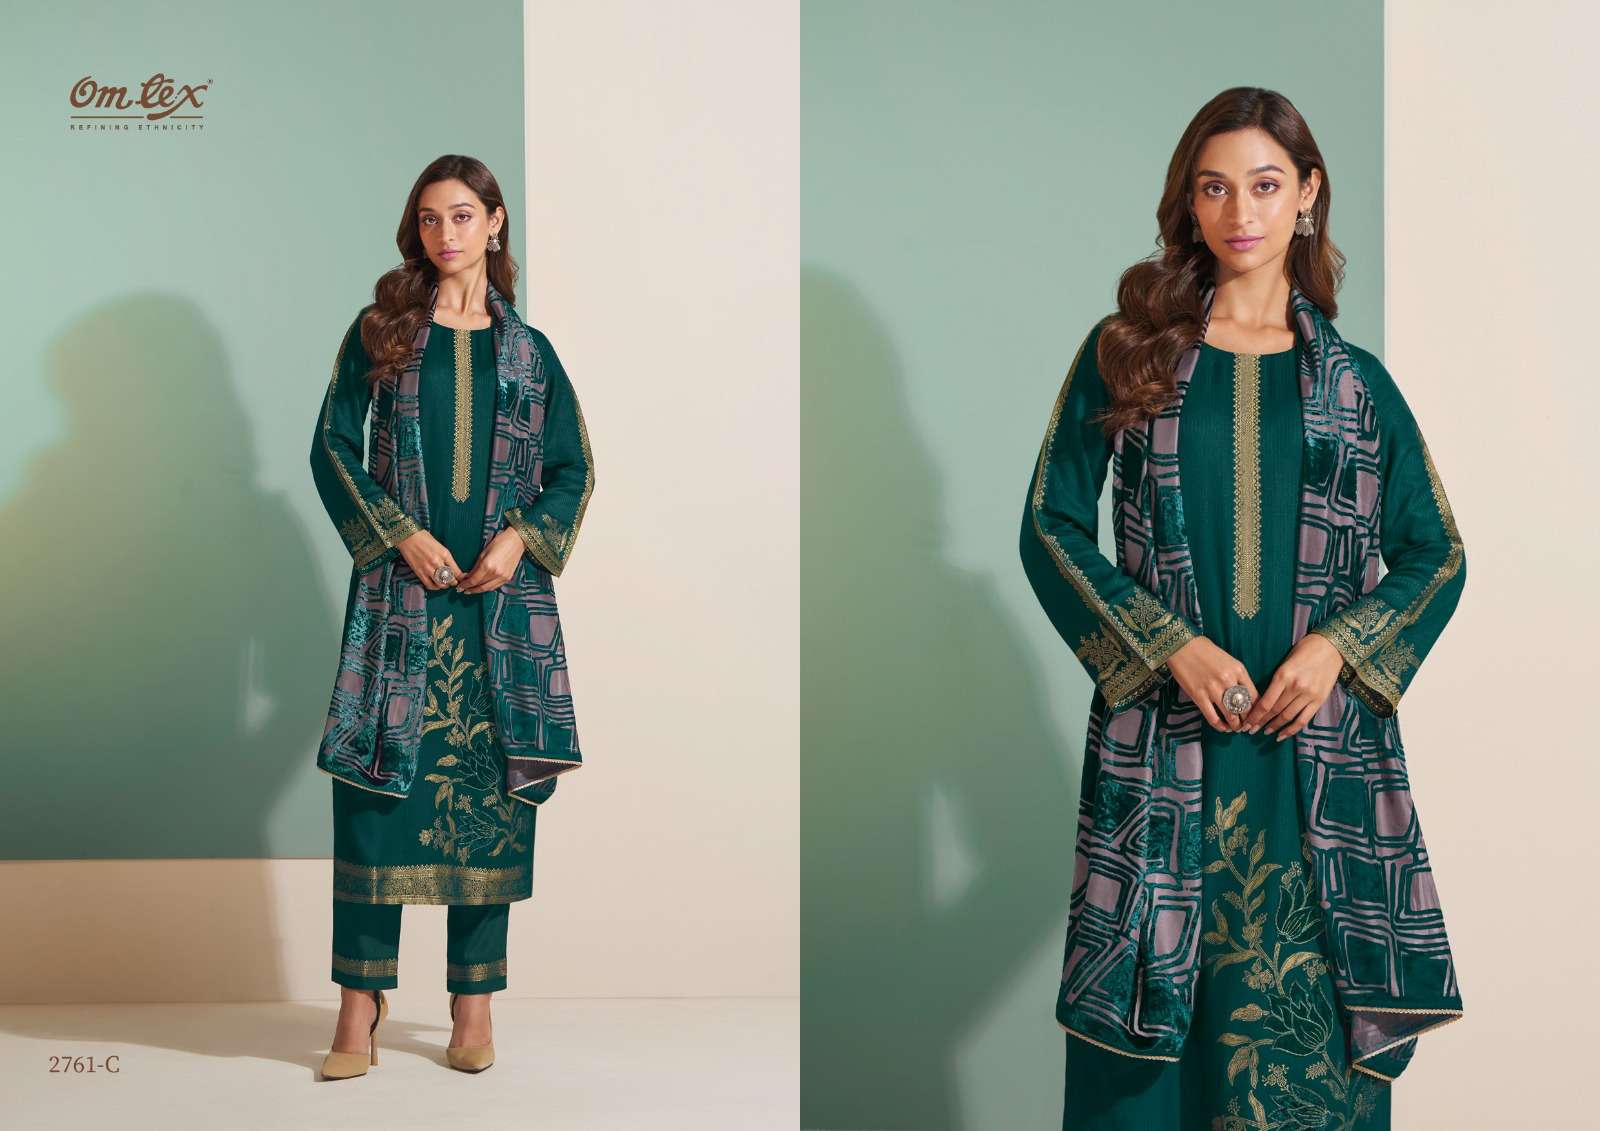 omtex laboni pashmina silk designer colour series winter collection wholesale price surat 